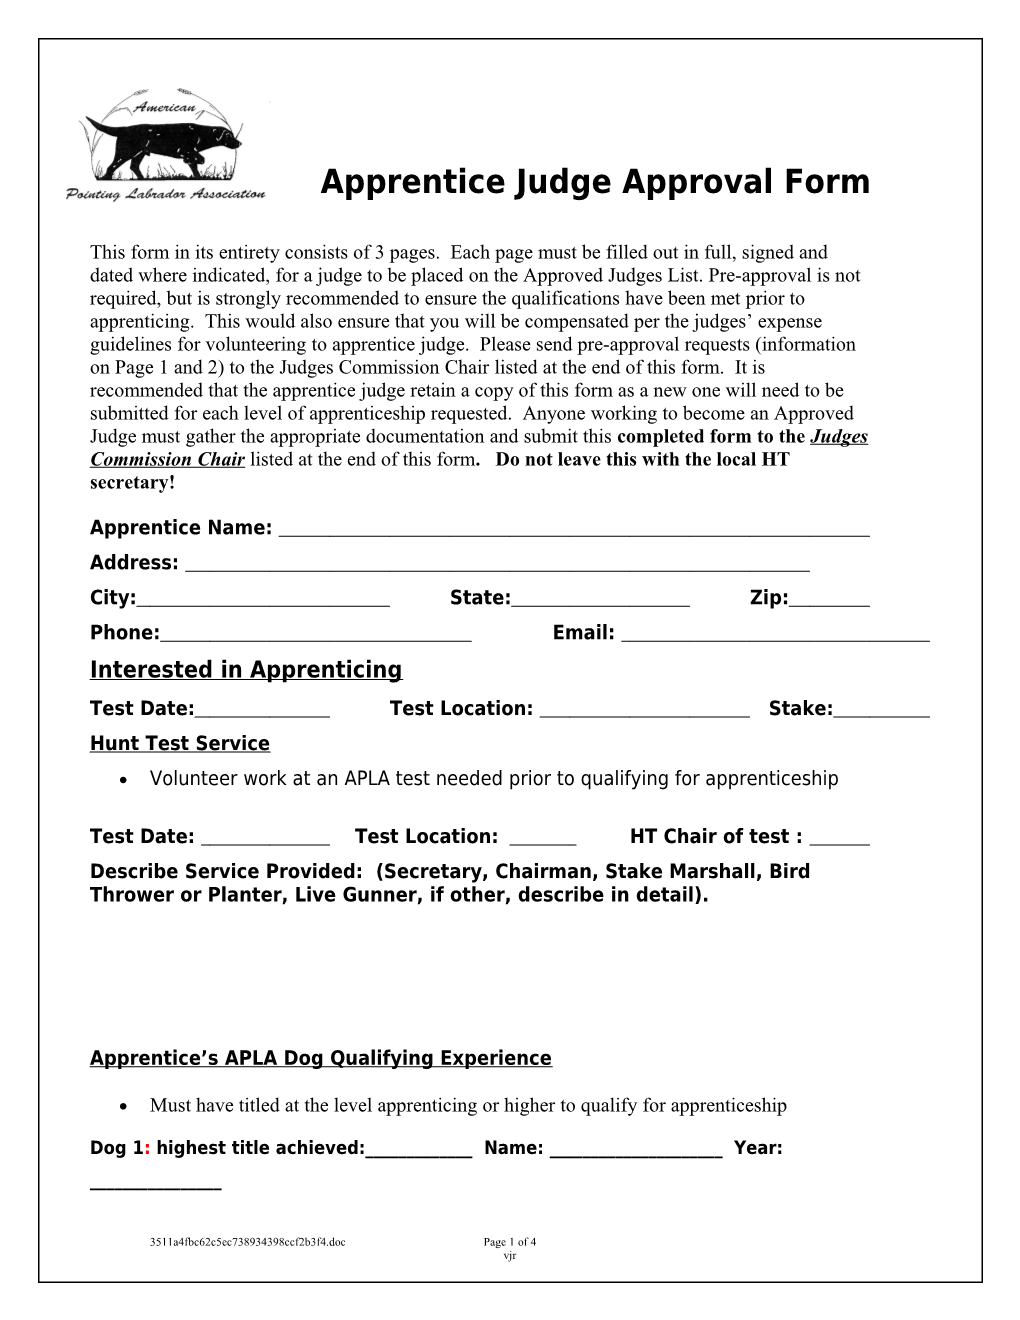 Apprentice Judging Approval Form